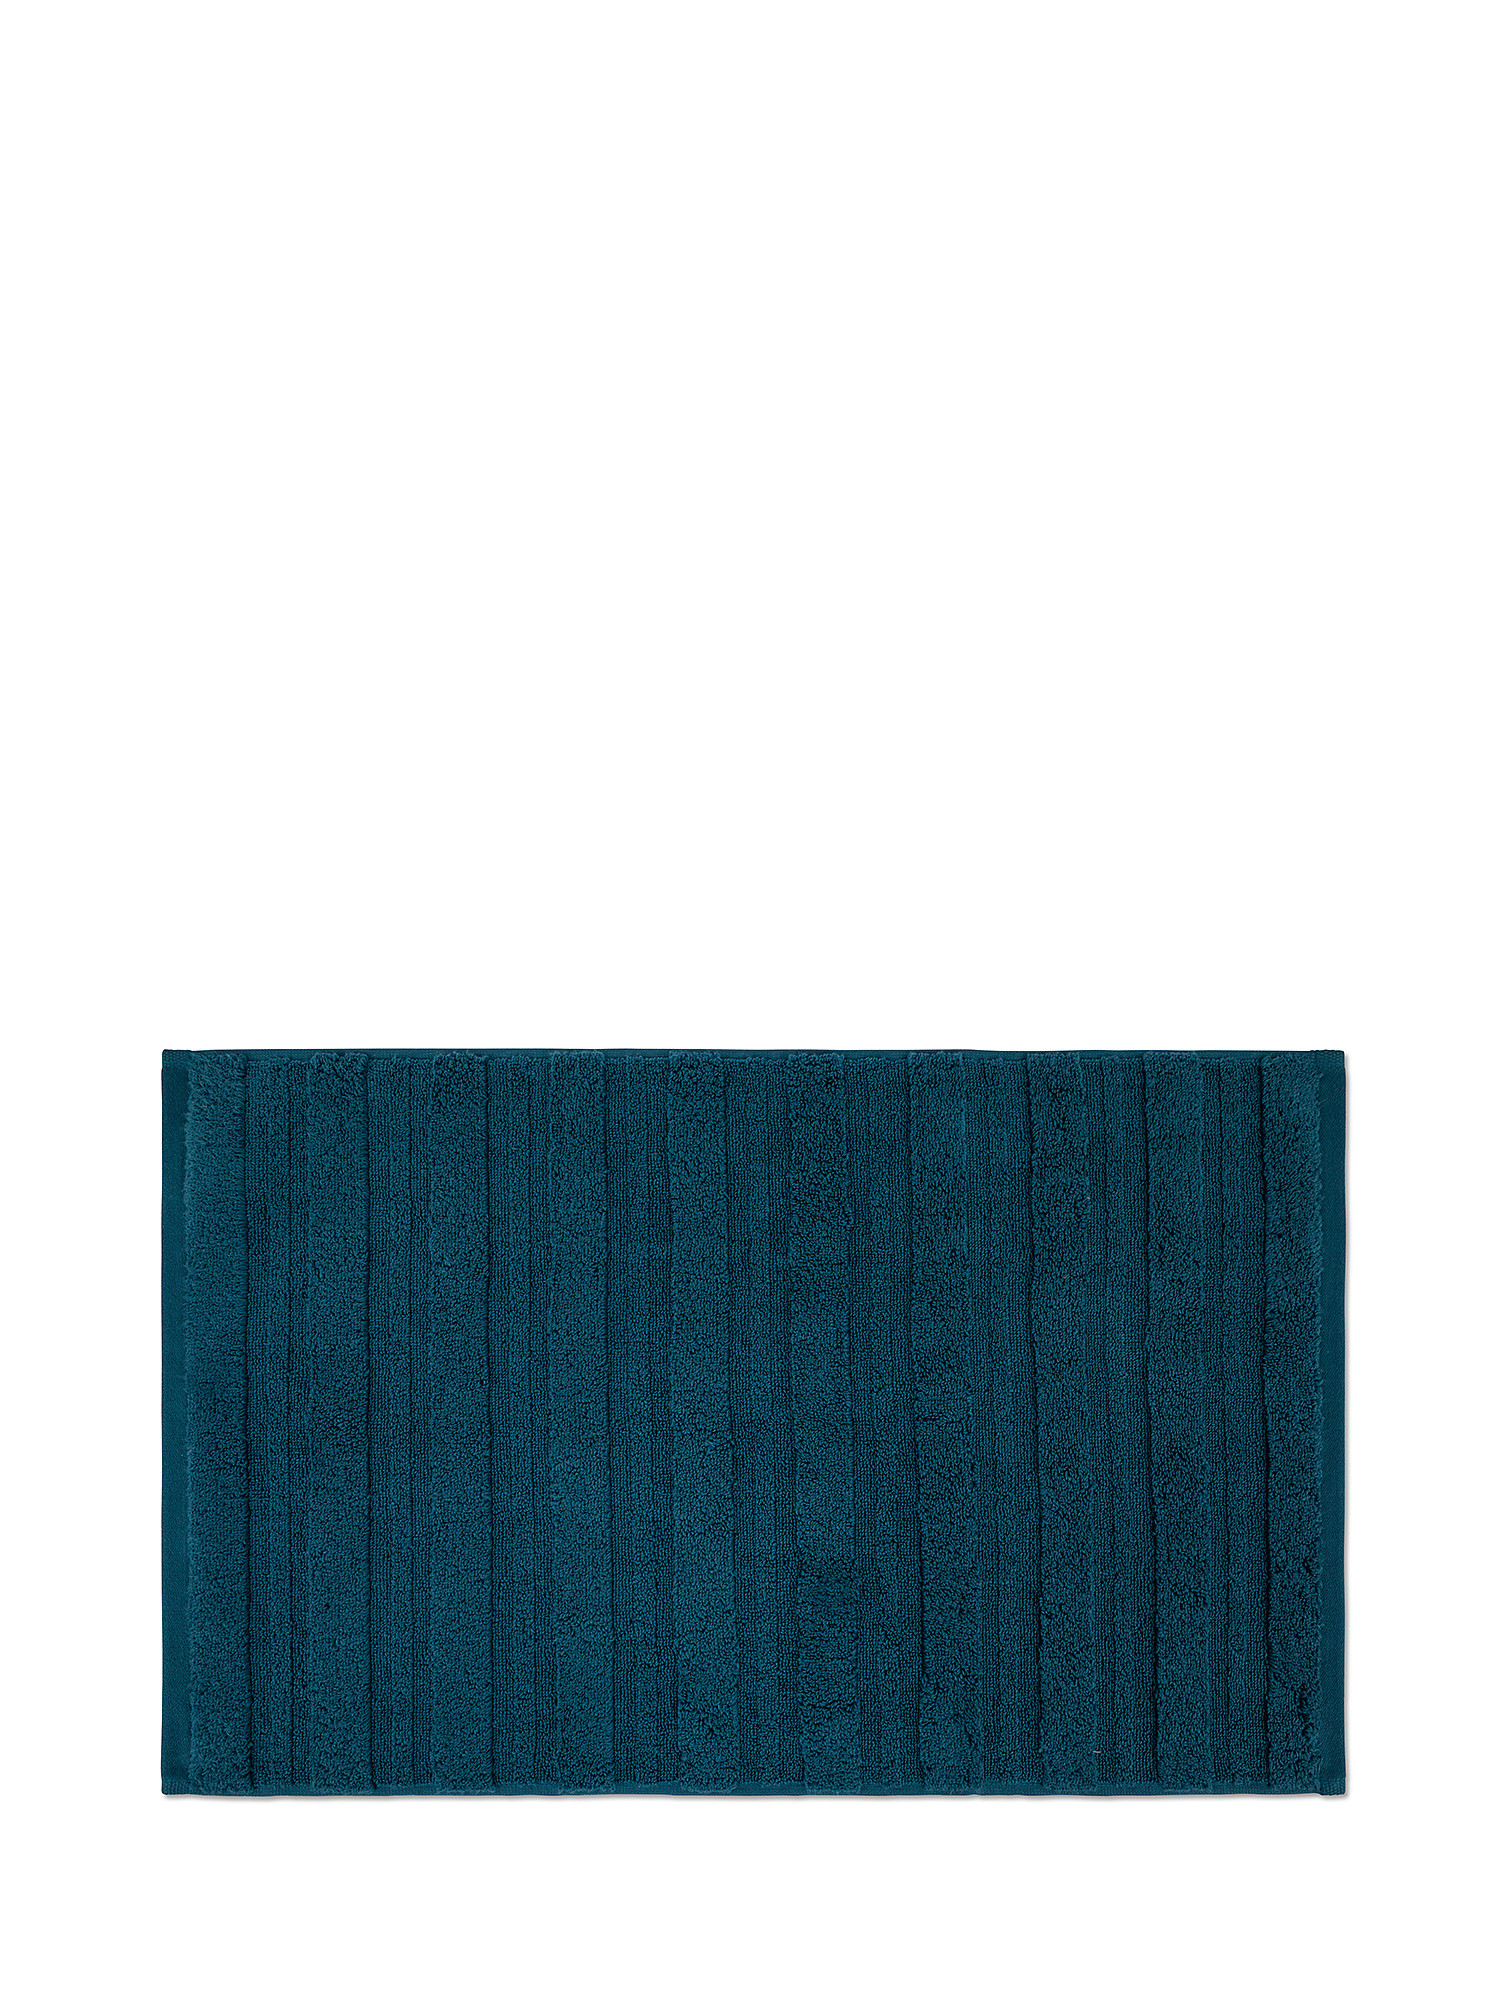 Asciugamano puro cotone tinta unita Zefiro Gold, Blu, large image number 1